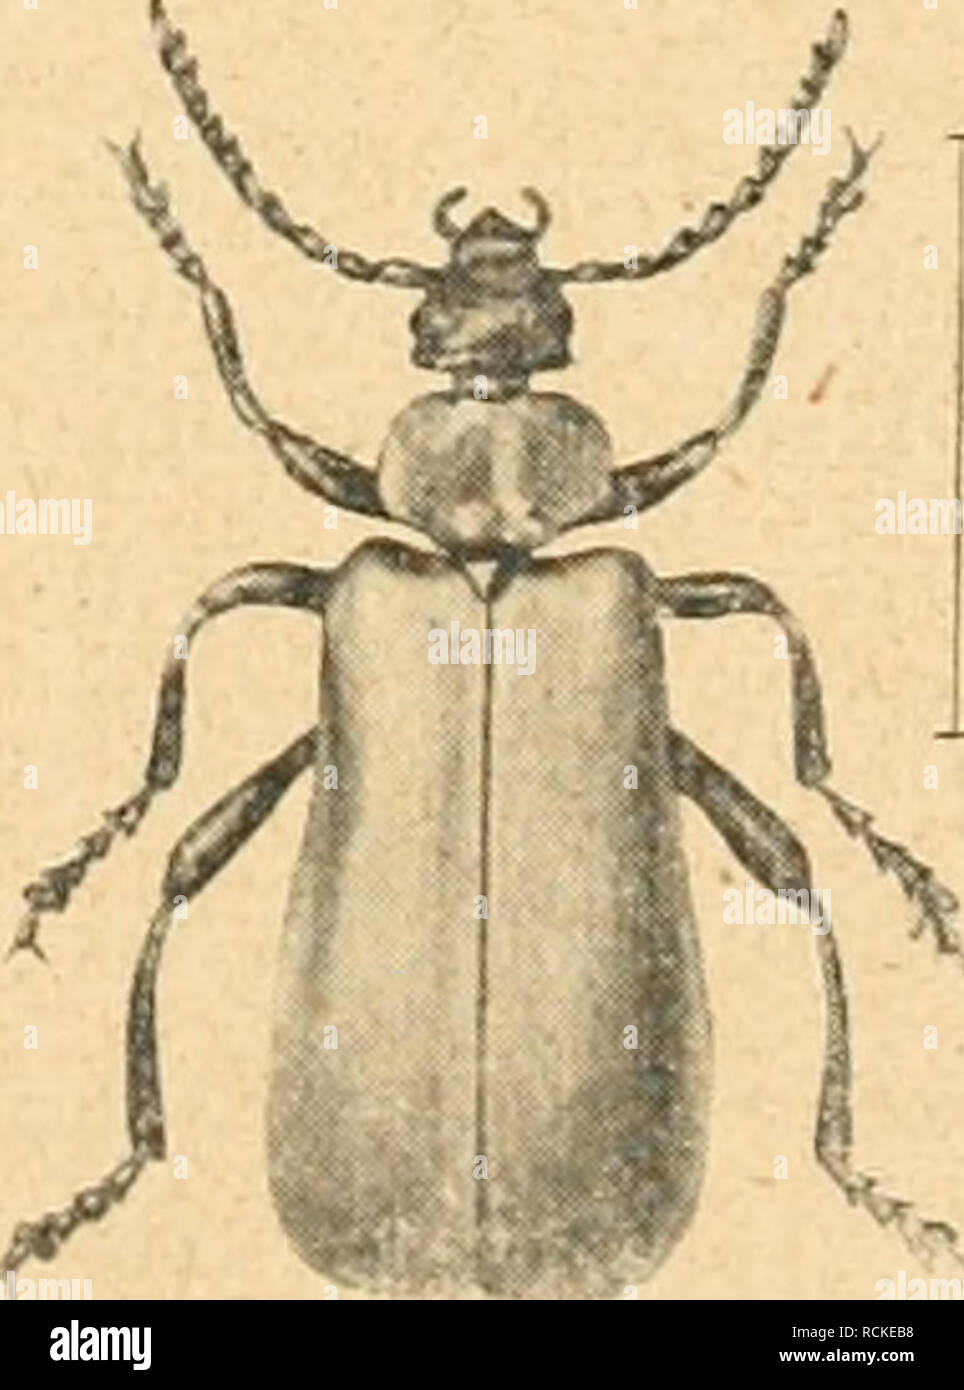 . Die forstinsekten Mitteleuropas. Ein lehr- und handbuch. Trees; Beneficial insects. Cr J Abb. 94. Verschiedene Heteromeren. A Phyto depressus L., B Lissoderma 4-pustulatum Mrsh., C Rhinosimus ruficollis L. (Pythide), D Tomoxia biguttata Gyll. (Mordellide), E Calopus serraticornis L. (Oedemeride), F Helops lanipes L., G Hypophloeus fasciatus L. (Tenebrioniden), H Serropalpus barbatus Schall. (Melandryide), J Pyrochroa coccinea L. (Pyrochroide). — Original. 13*. Please note that these images are extracted from scanned page images that may have been digitally enhanced for readability - colorati Stock Photo